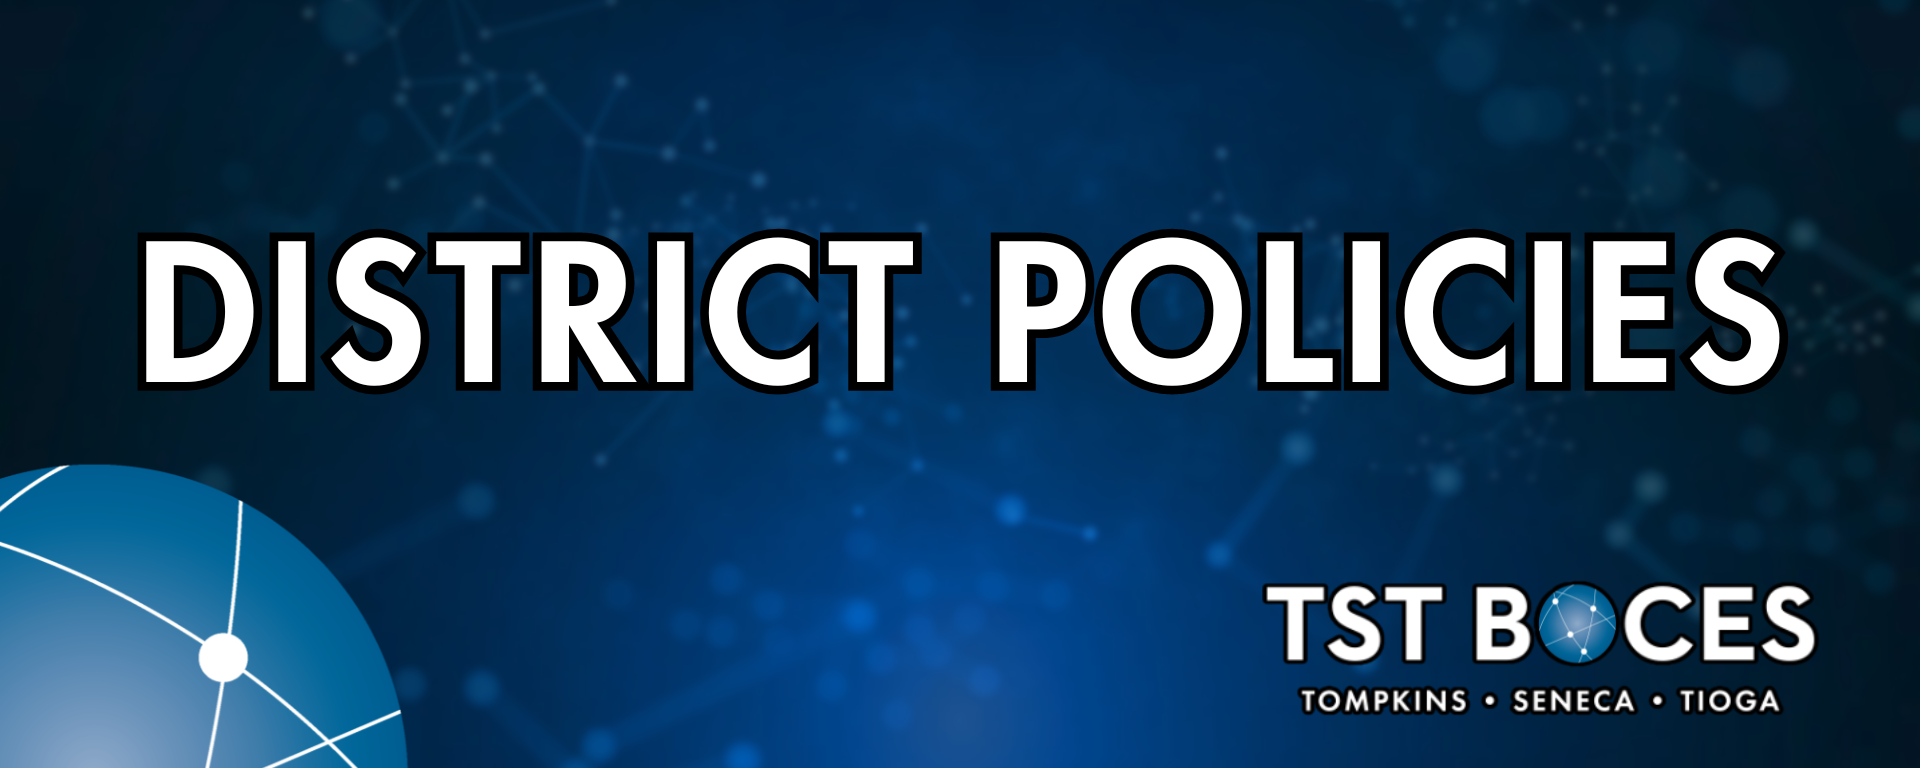 district policies banner